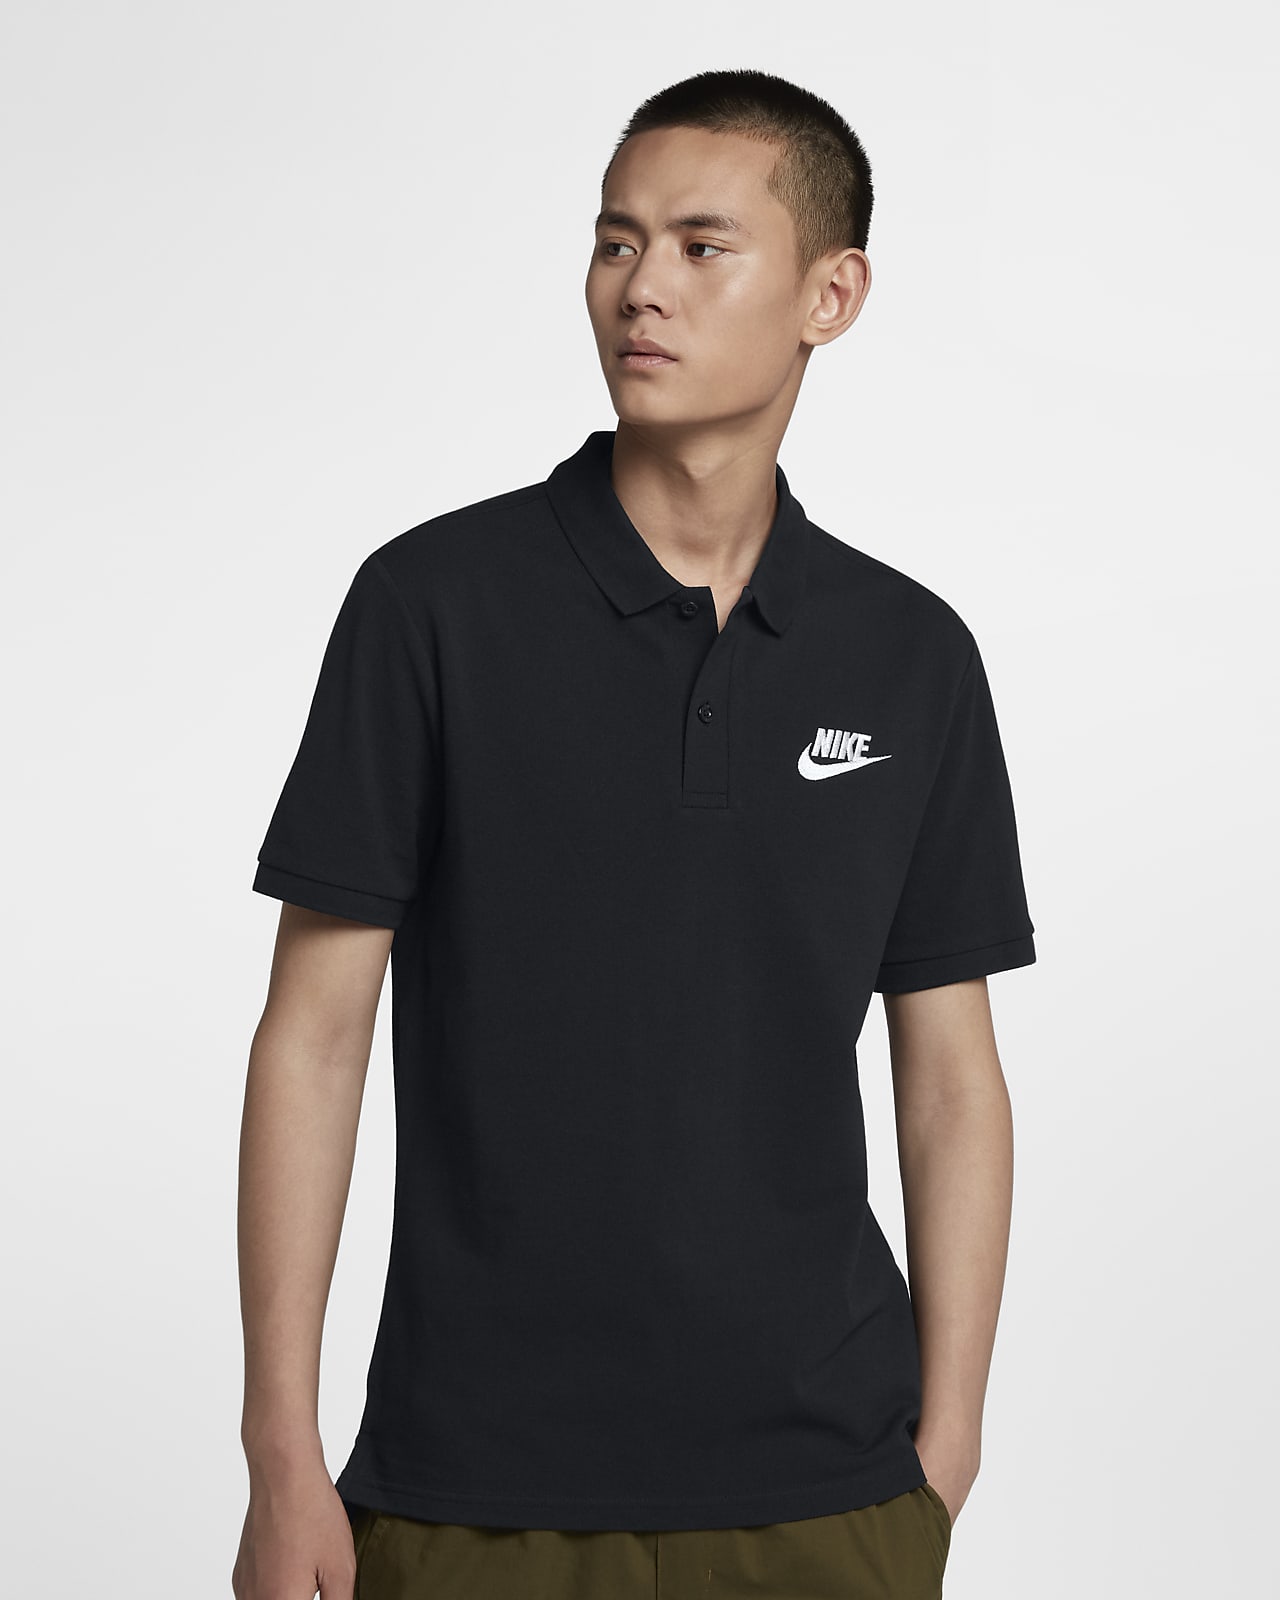 Nike Sportswear 男款 Polo 衫